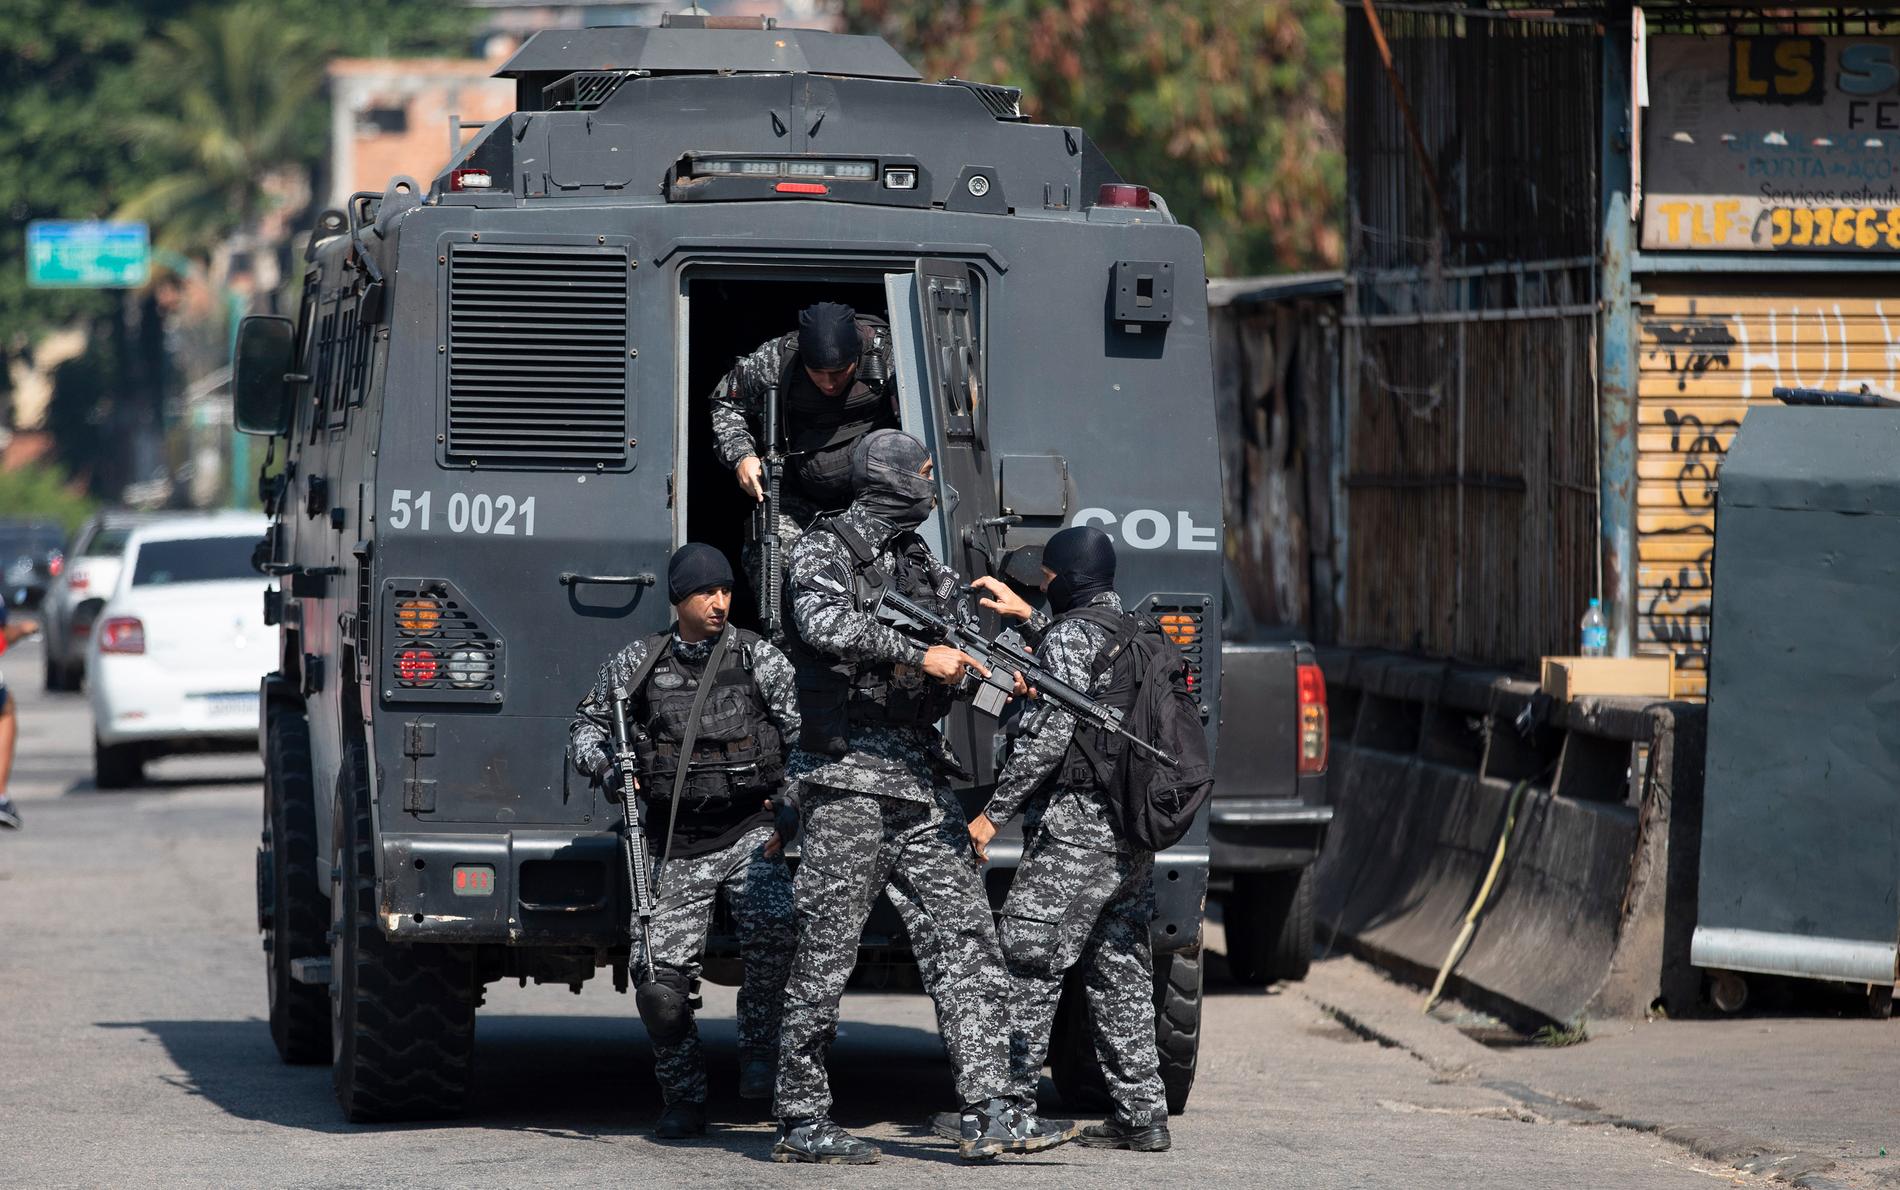 Polis med pansarfordon under en operation mot påstådda narkotikasmugglare i Jacarezinho favela i Rio de Janeiro, Brasilien, torsdagen den 6 maj.